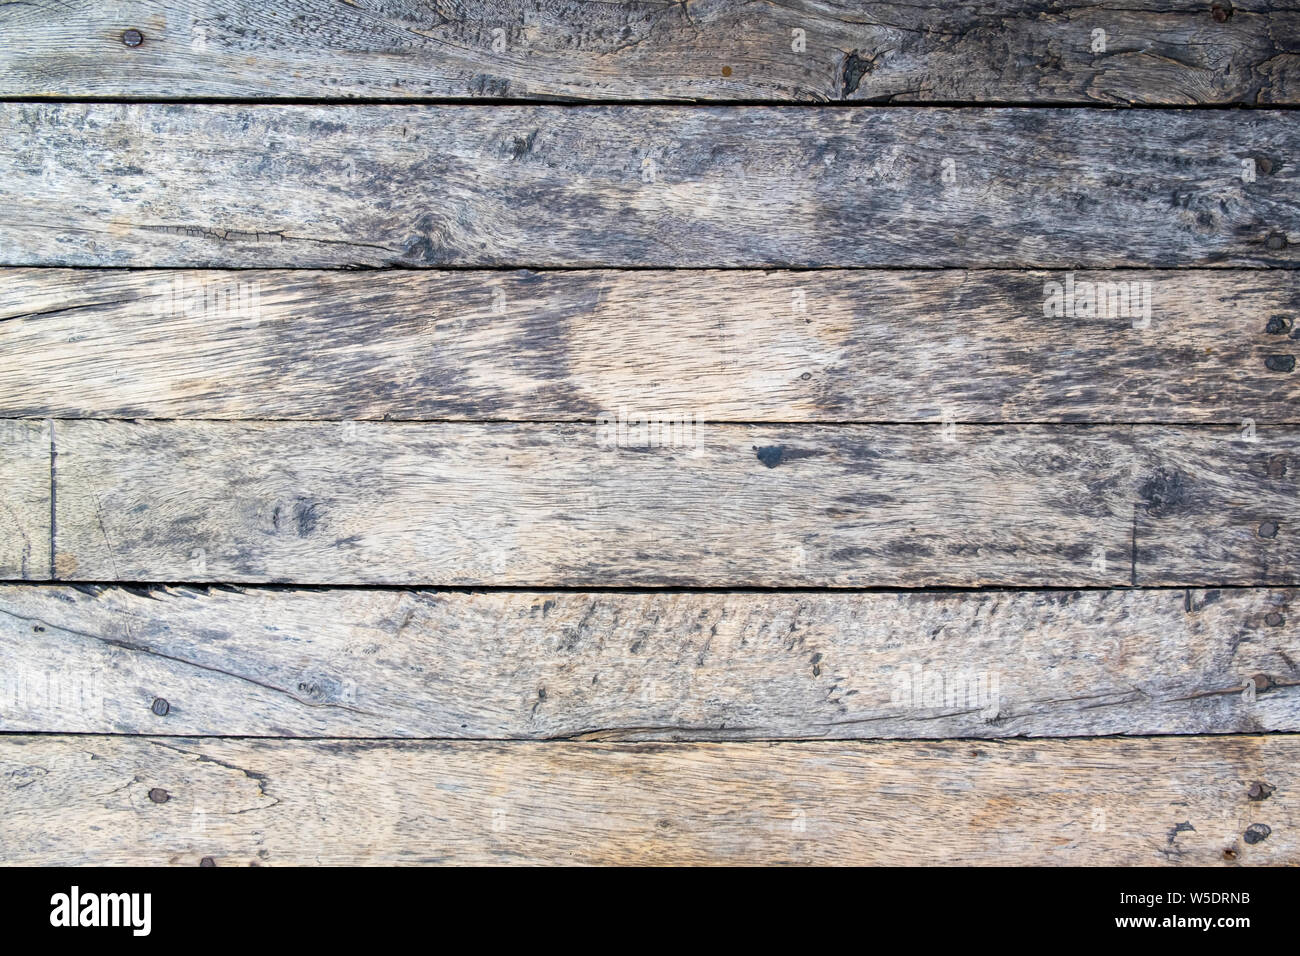 Texture of old wood. Background image. Macro photo. Stock Photo